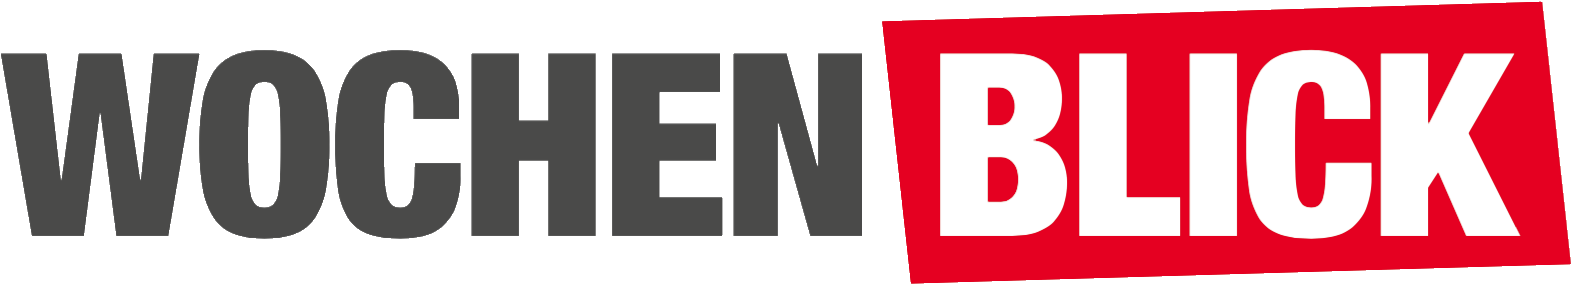 Wochenblick_Logo